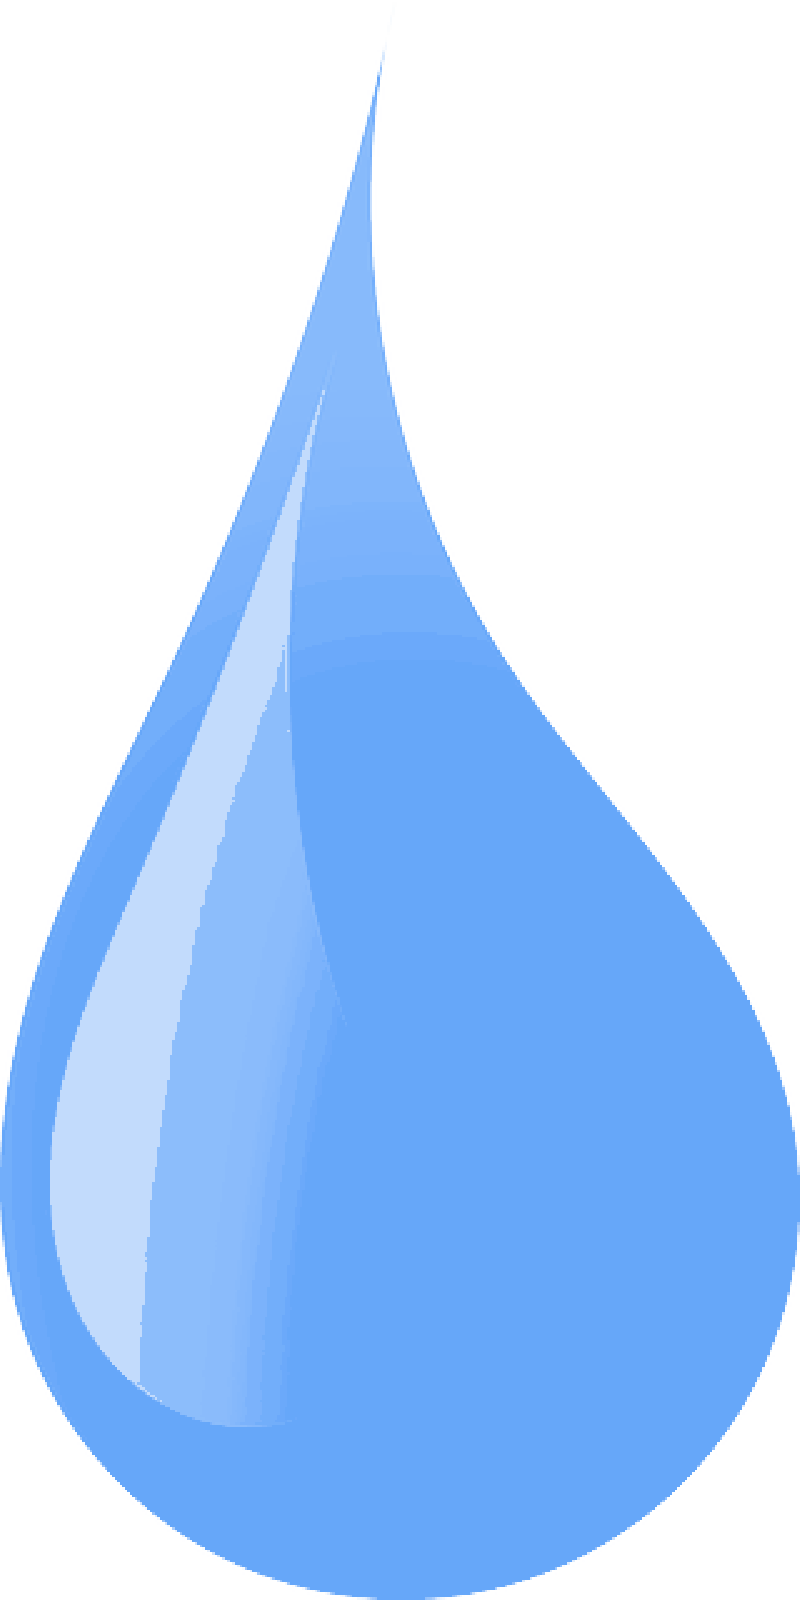 Water tear teardrop liquid. Raindrop clipart rain drop